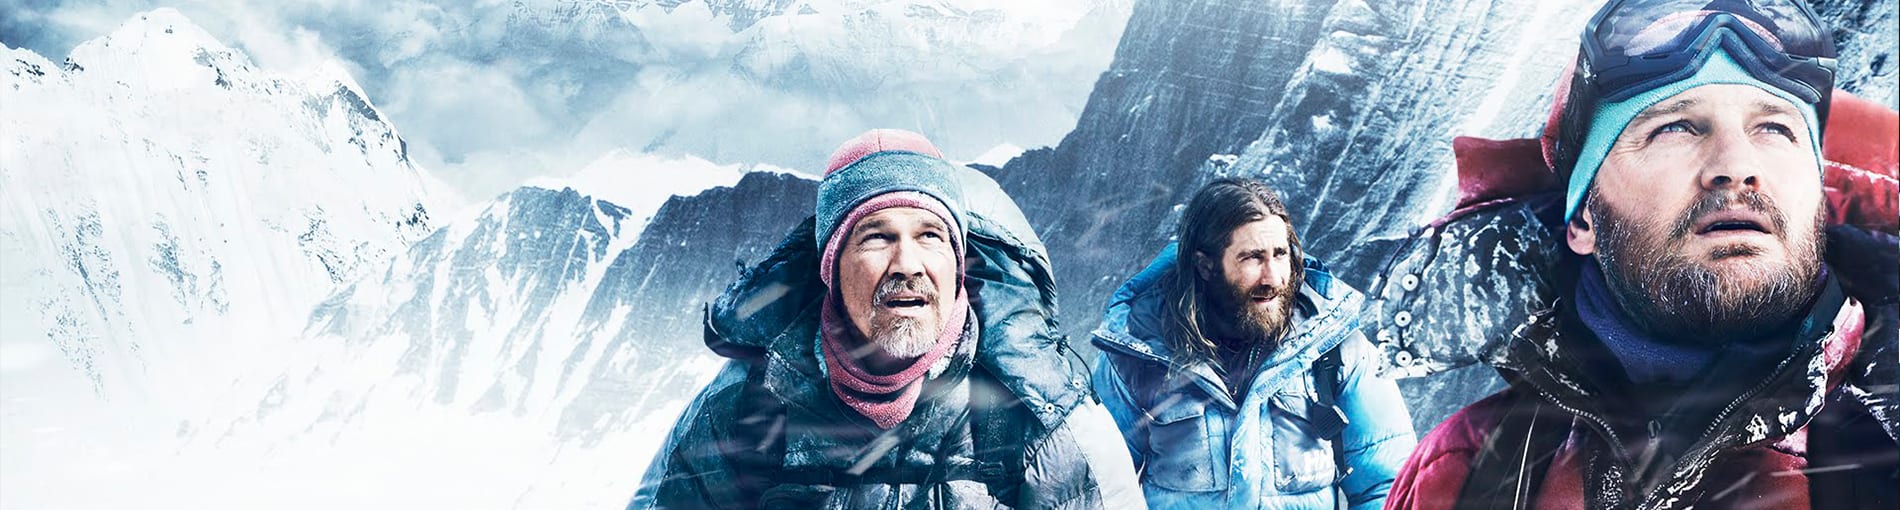 Crítica de cine: Everest